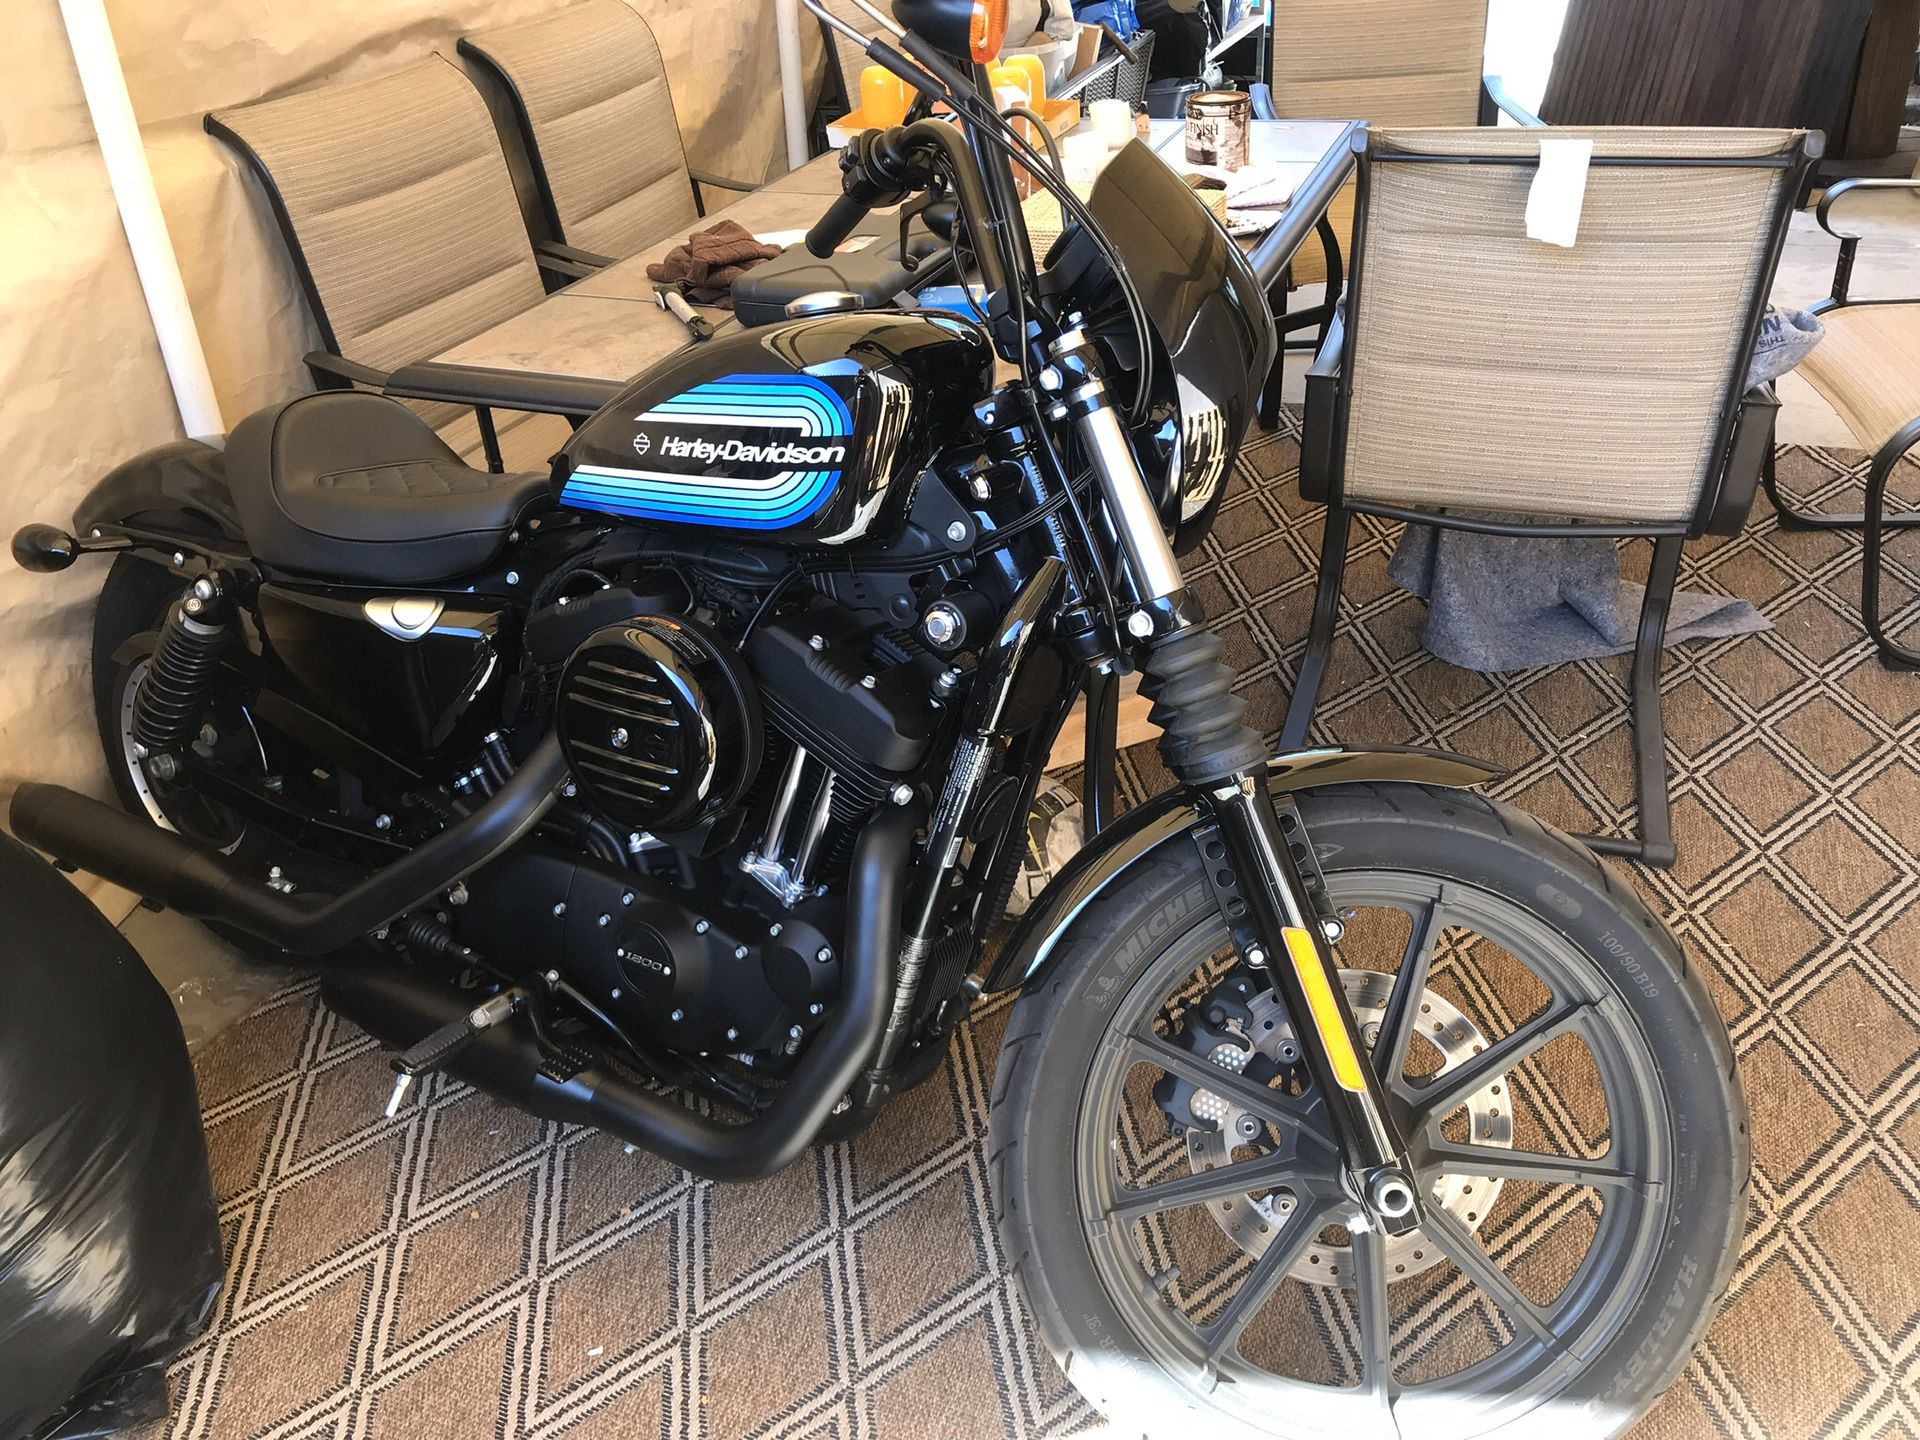 2019 Harley Davidson Iron 1200 Sportster